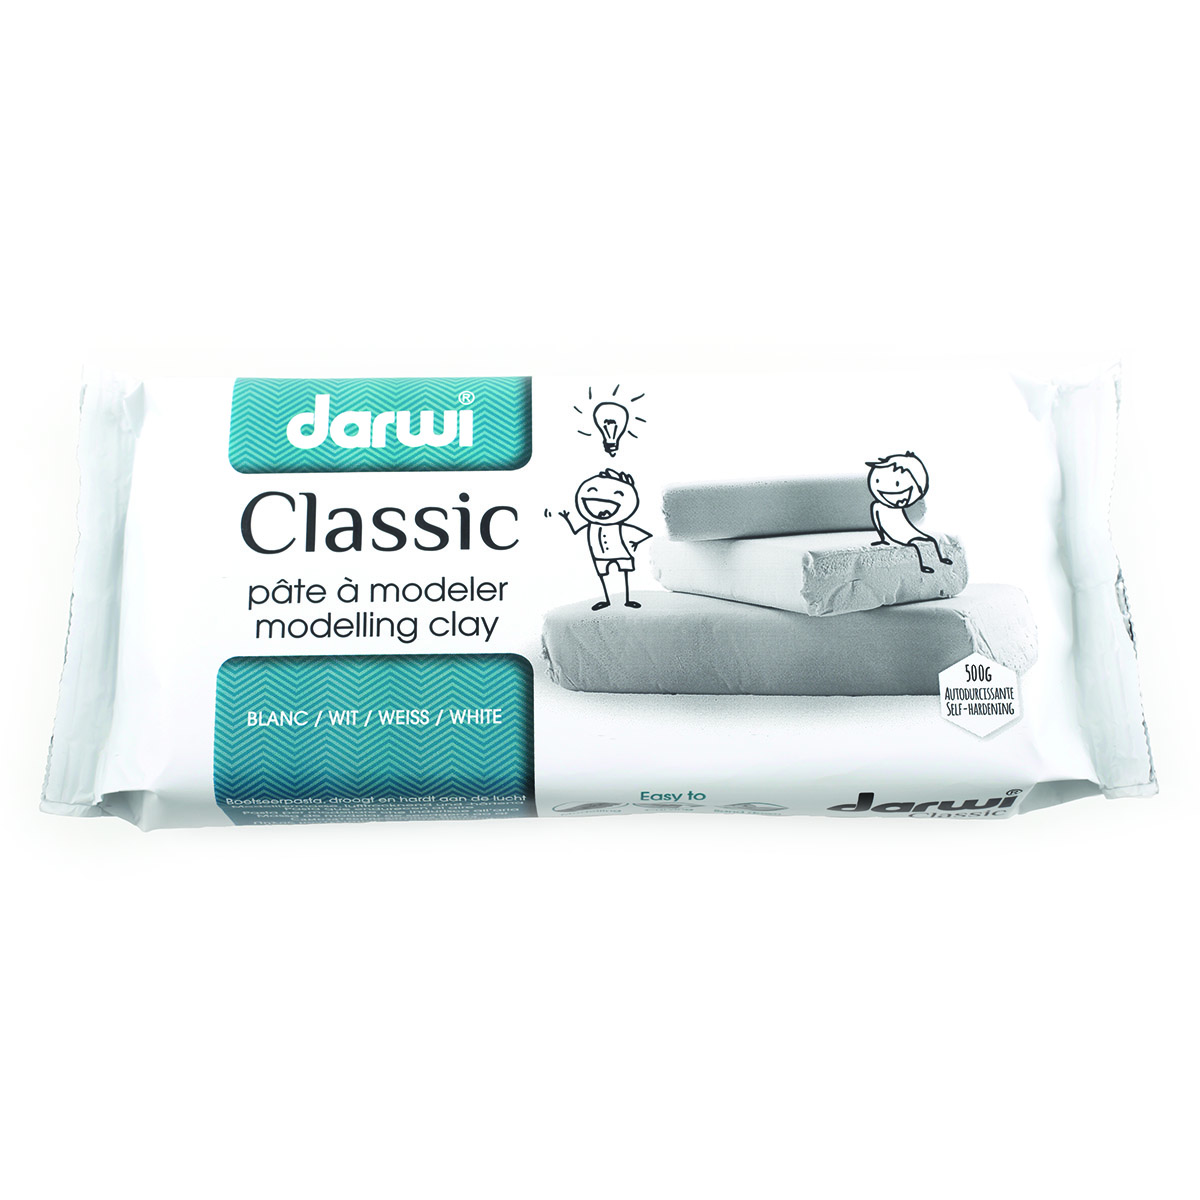 Паста для моделирования Classic, белая, 500 гр.  Darwi паста для моделирования darwi classic белая 1 кг darwi